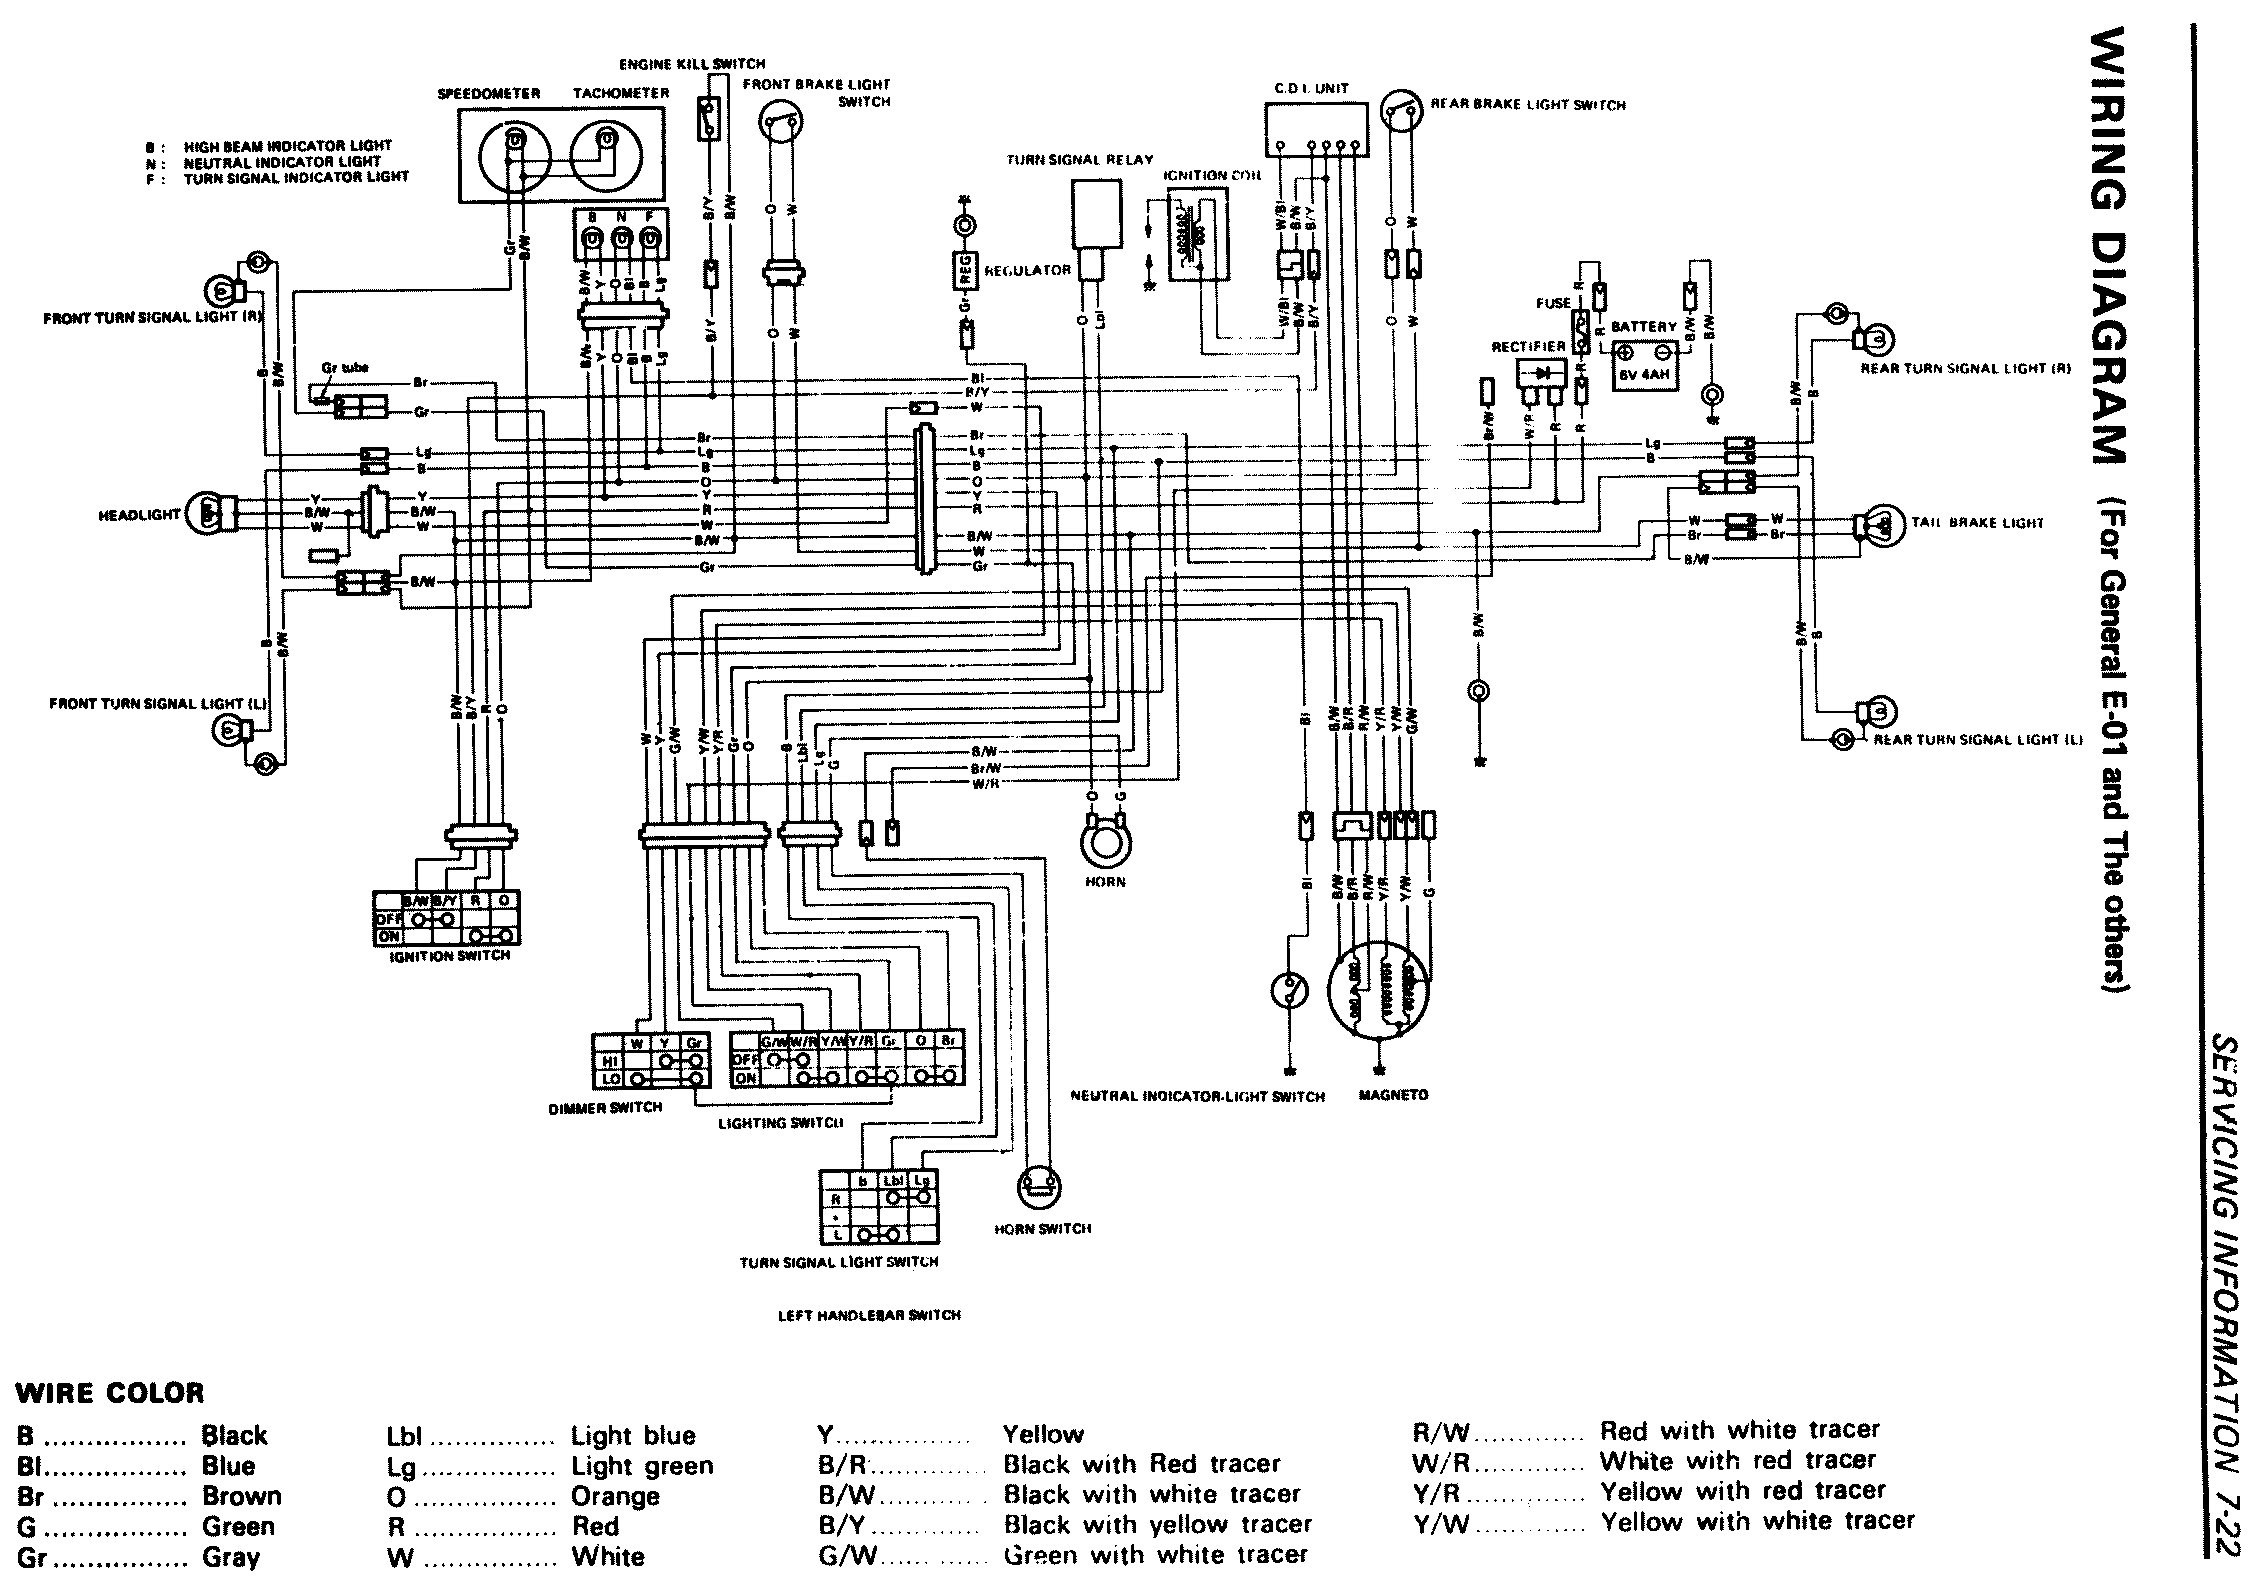 Suzuki Motorcycle Wiring Diagram as Well Wiring Diagram for 1980 Suzuki 550 Becker Wiring Diagram Of Suzuki Motorcycle Wiring Diagram